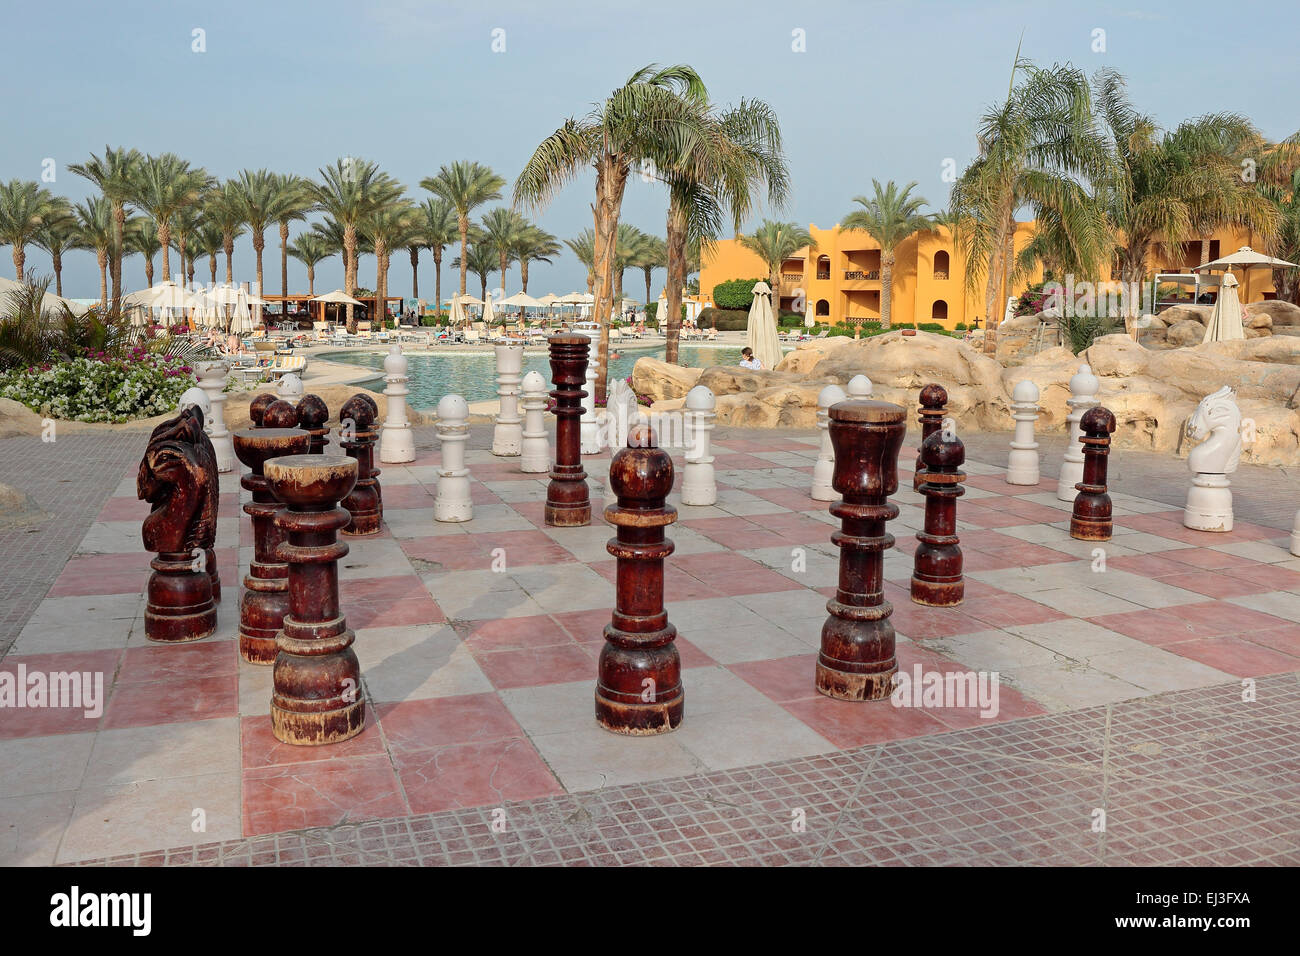 Large Wooden Chess Set by Hotel Swimming Pool at the Stalla Makadi Beach Hotel Hurghada Egypt Stock Photo